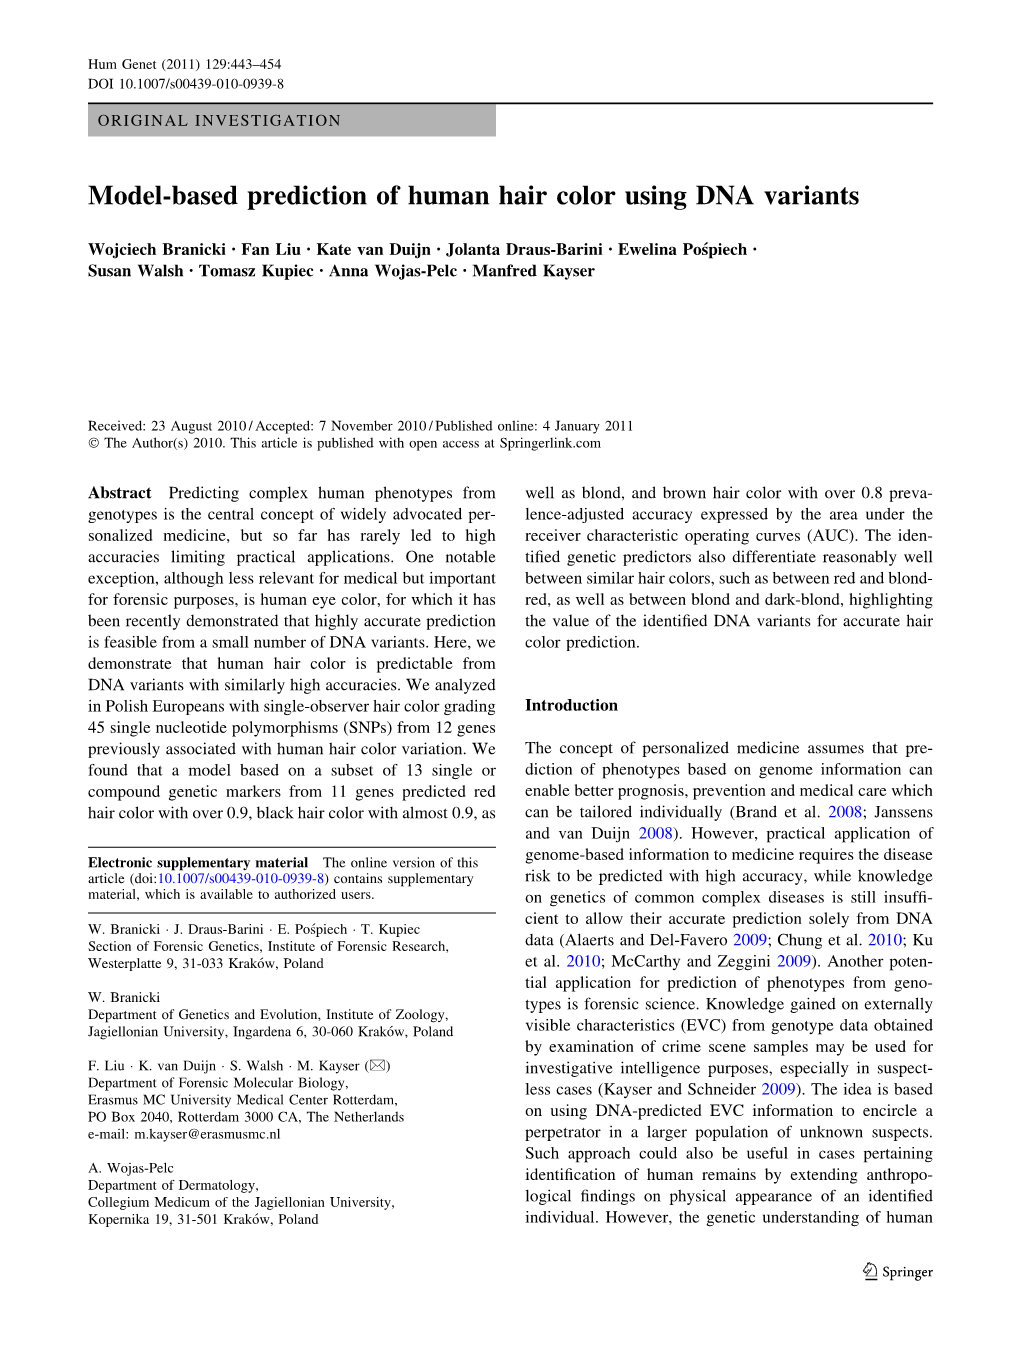 Model-Based Prediction of Human Hair Color Using DNA Variants